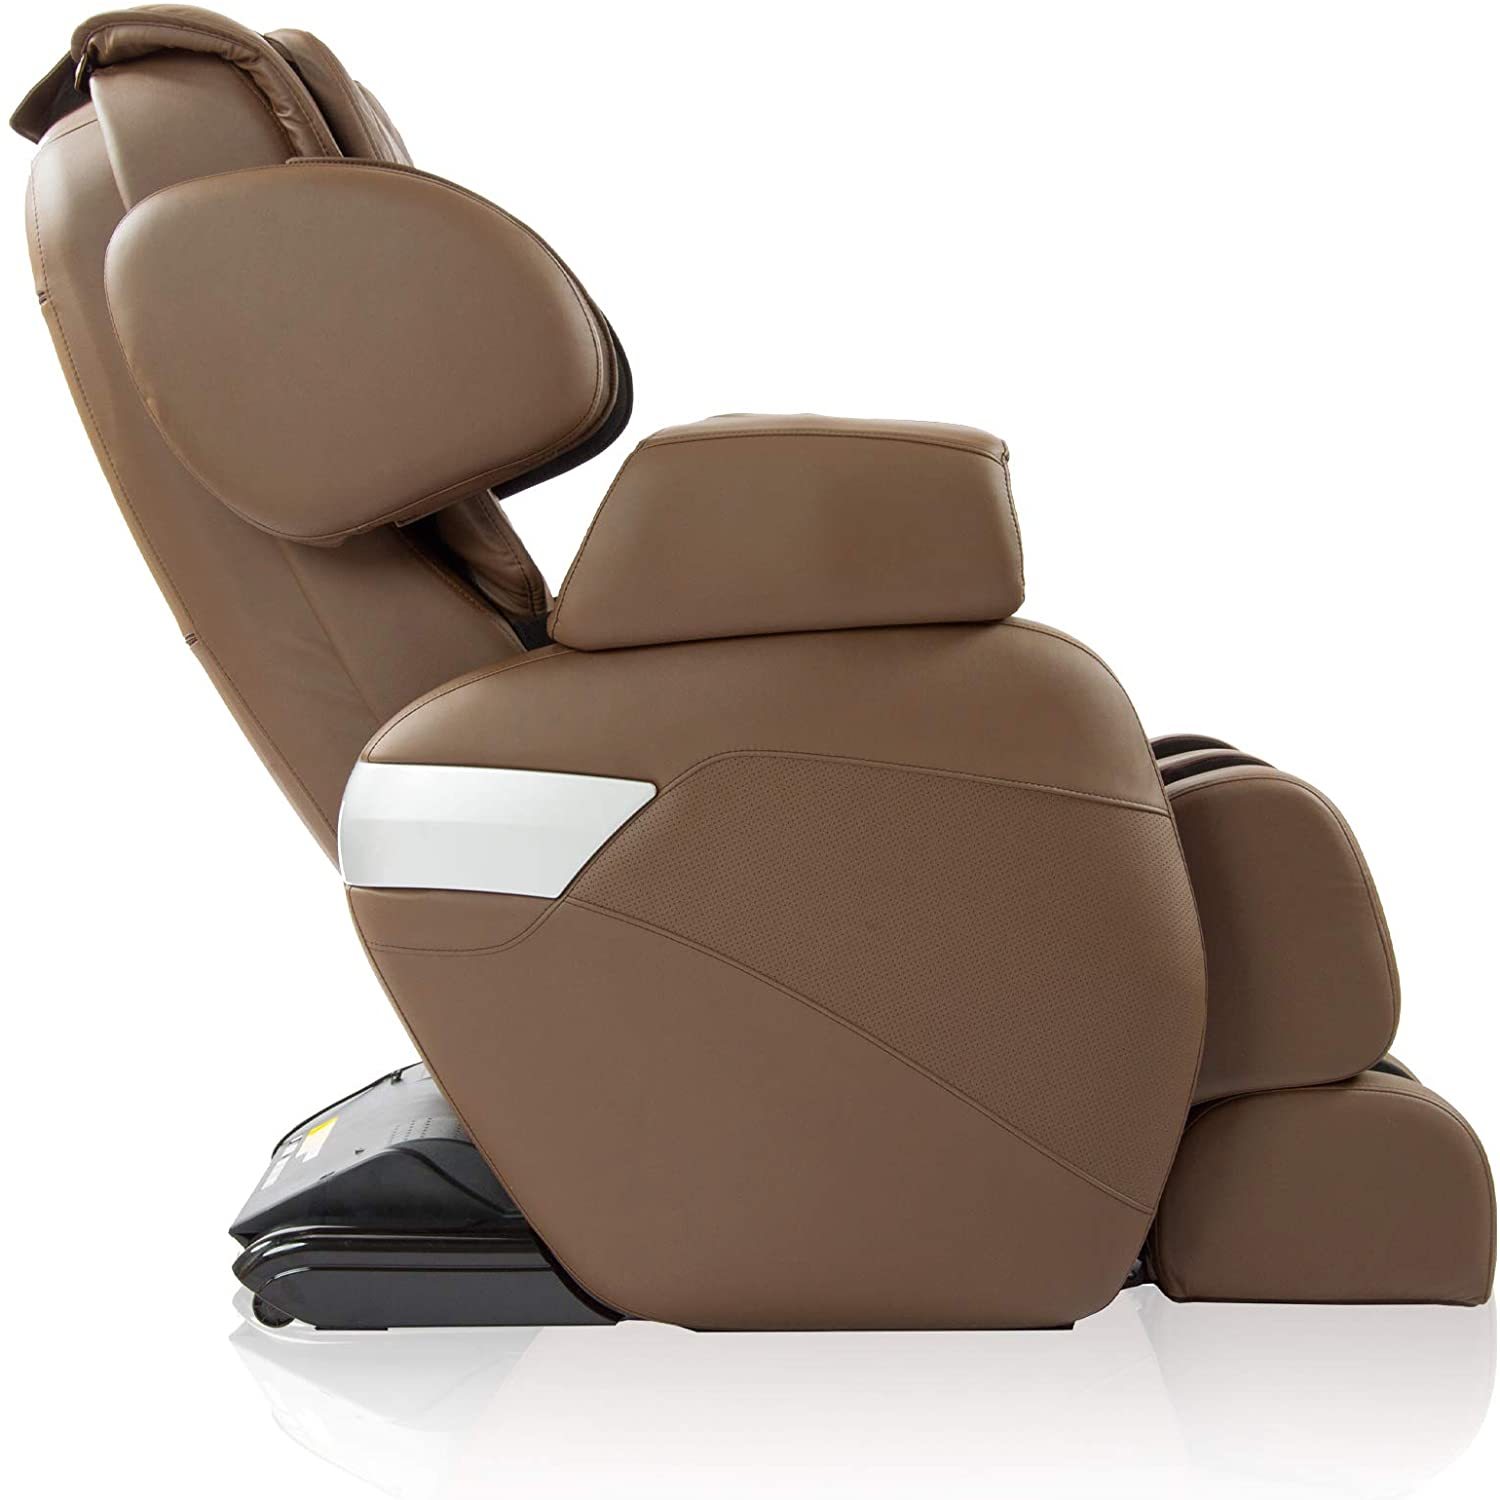 Relaxonchair Mk Ii Plus Full Body Zero Gravity Shiatsu Massage Chair Chocolate Chairs 8297